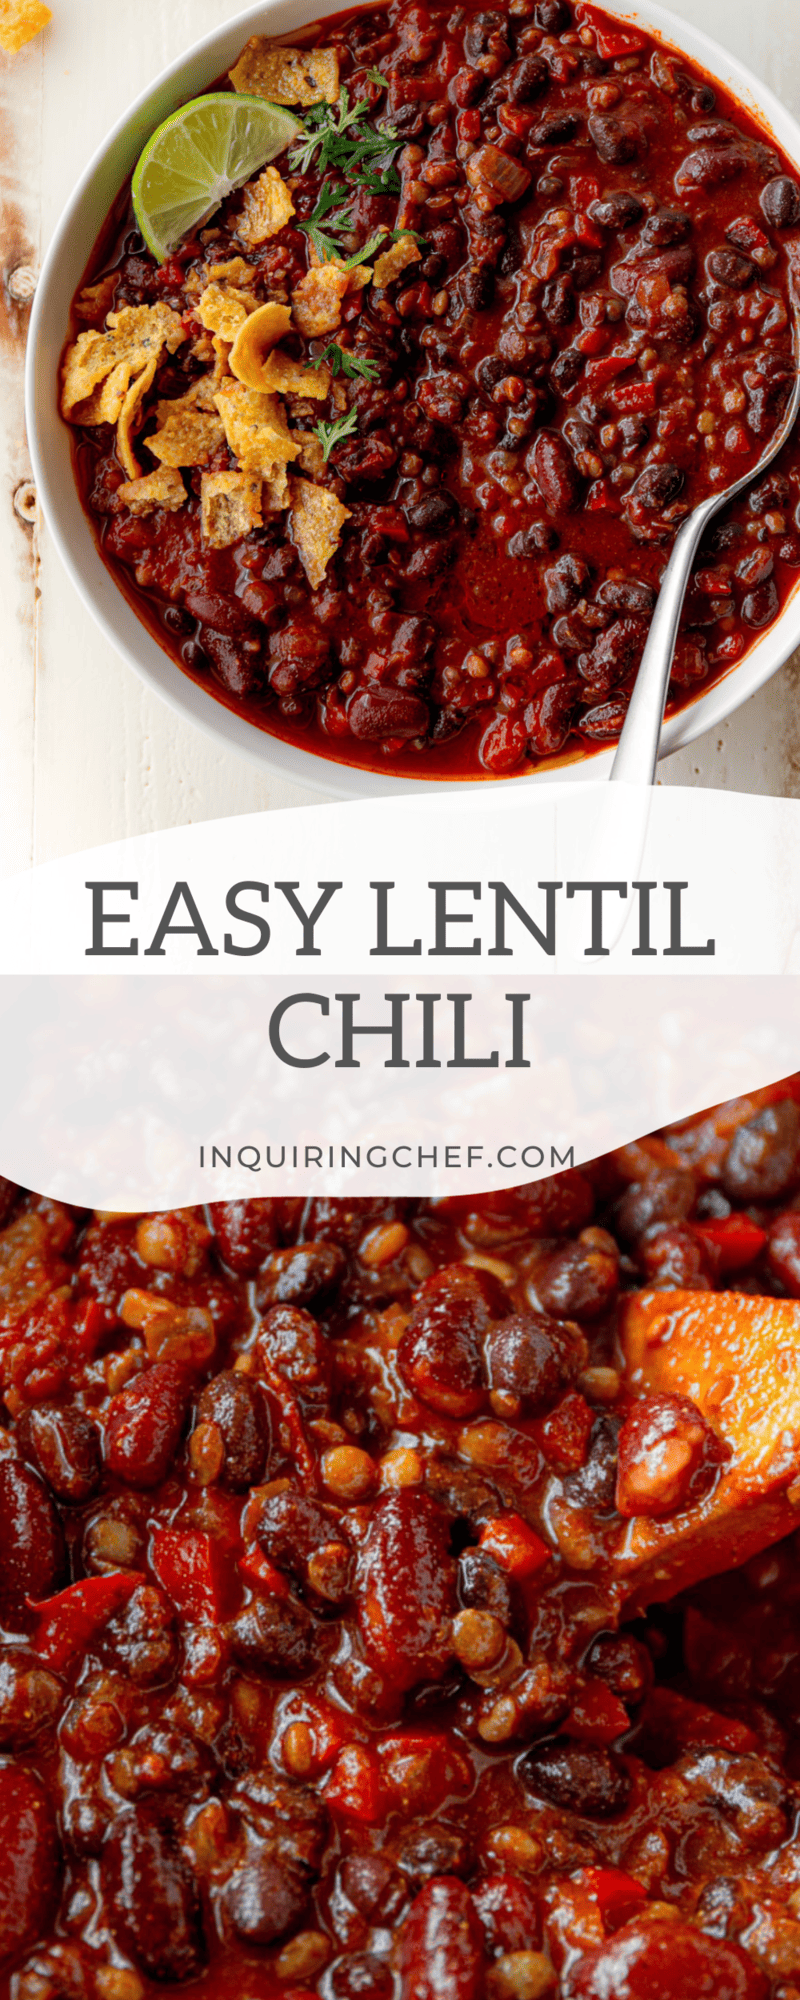 lentil chili